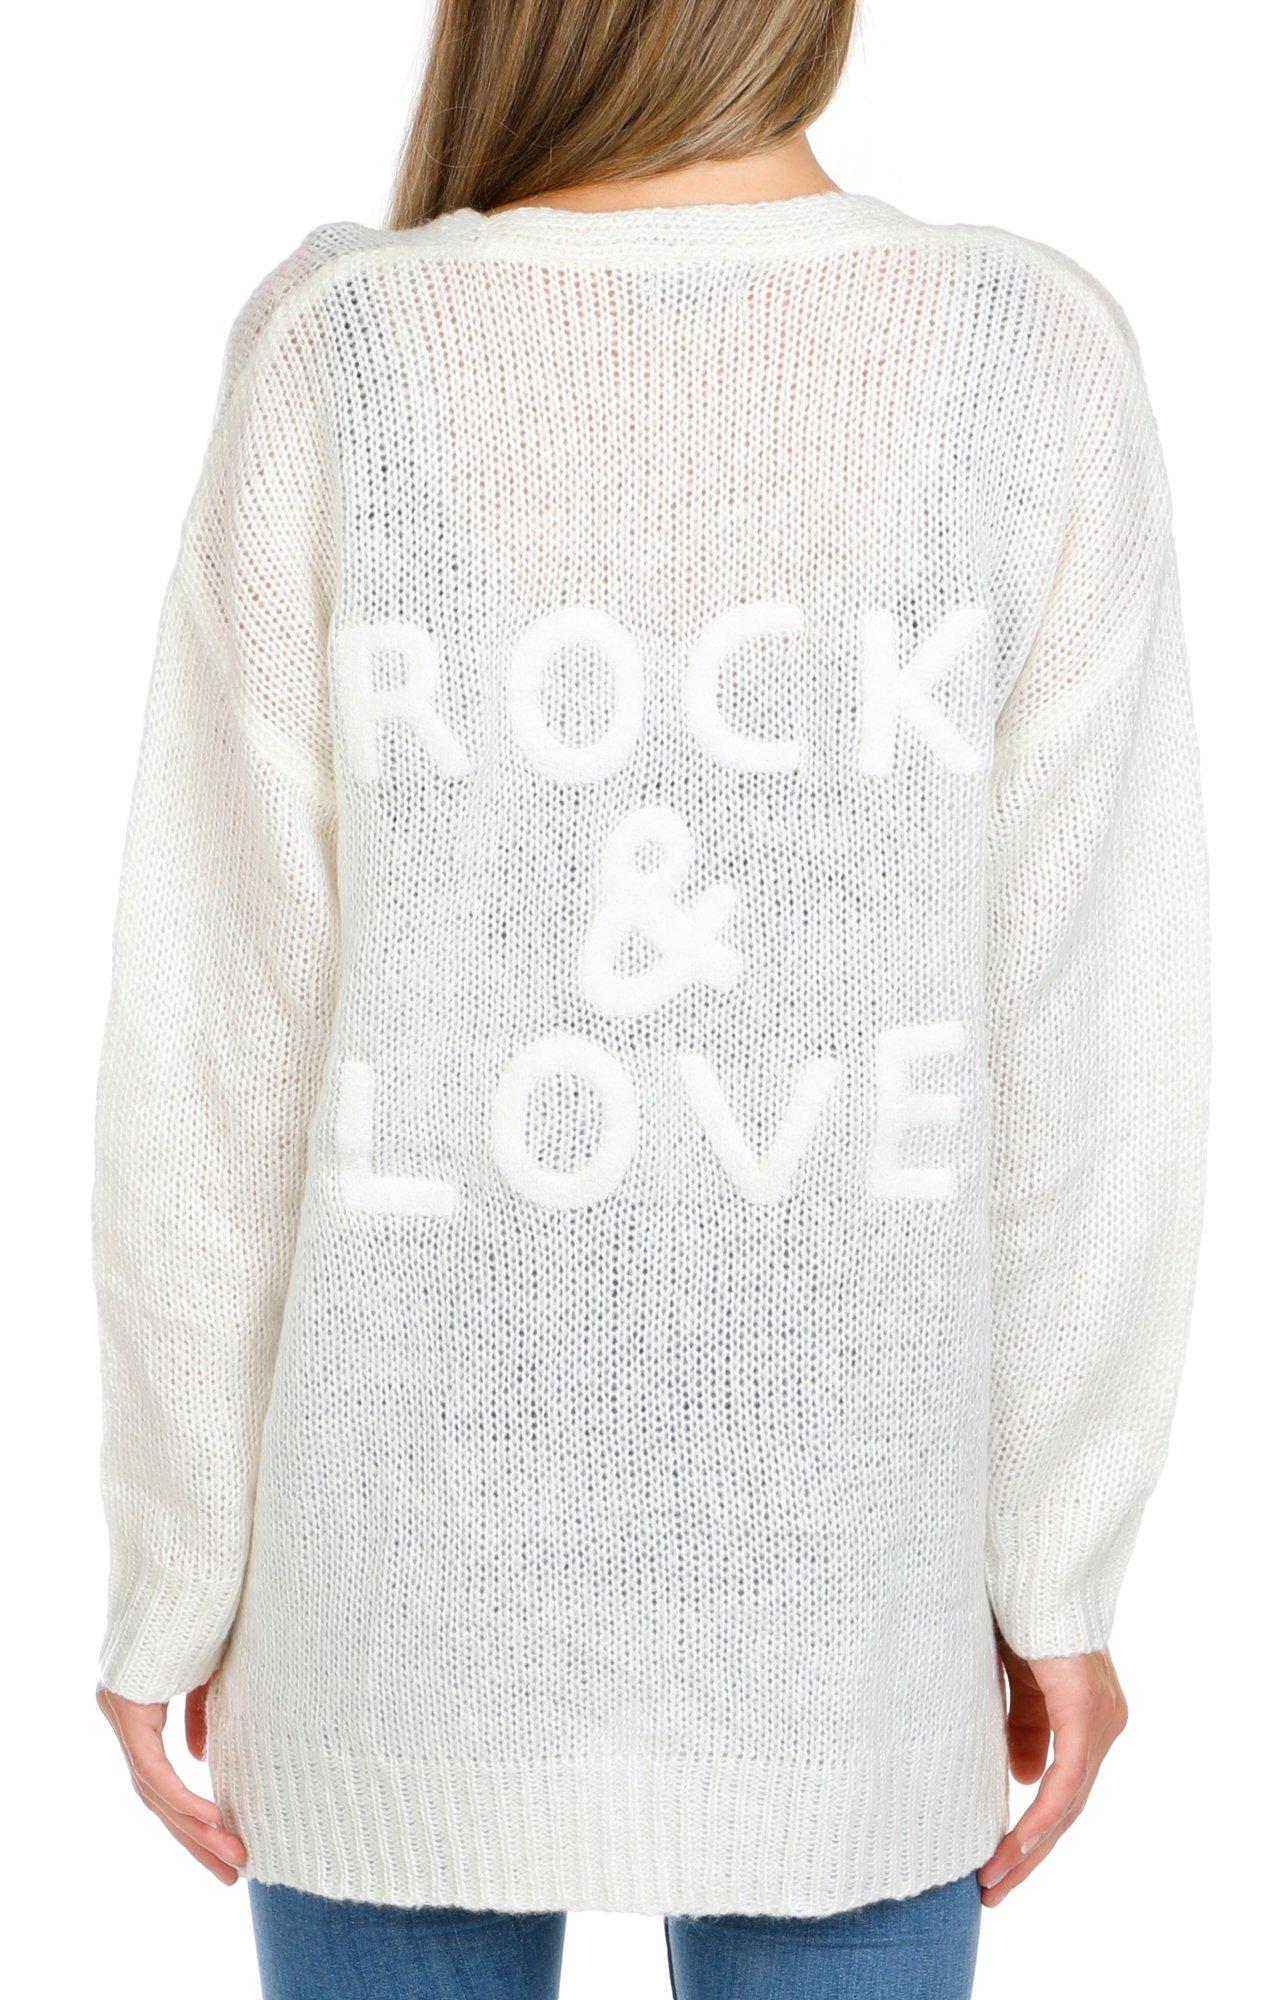 Juniors Solid Rock & Lover Sweater